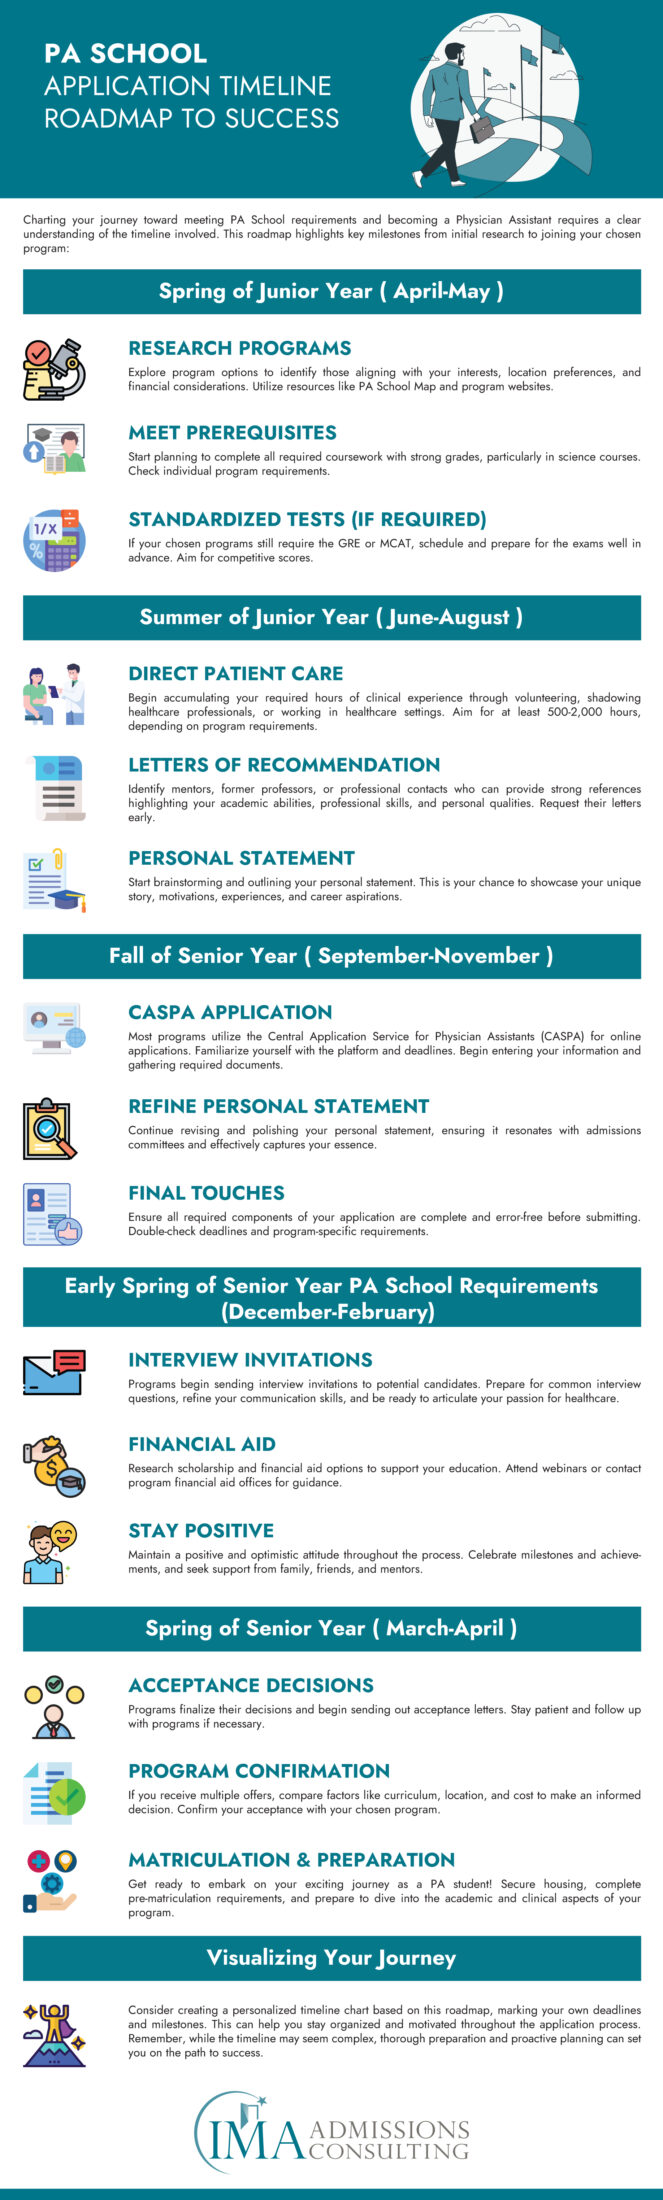 PA School Application Timeline Roadmap to Success